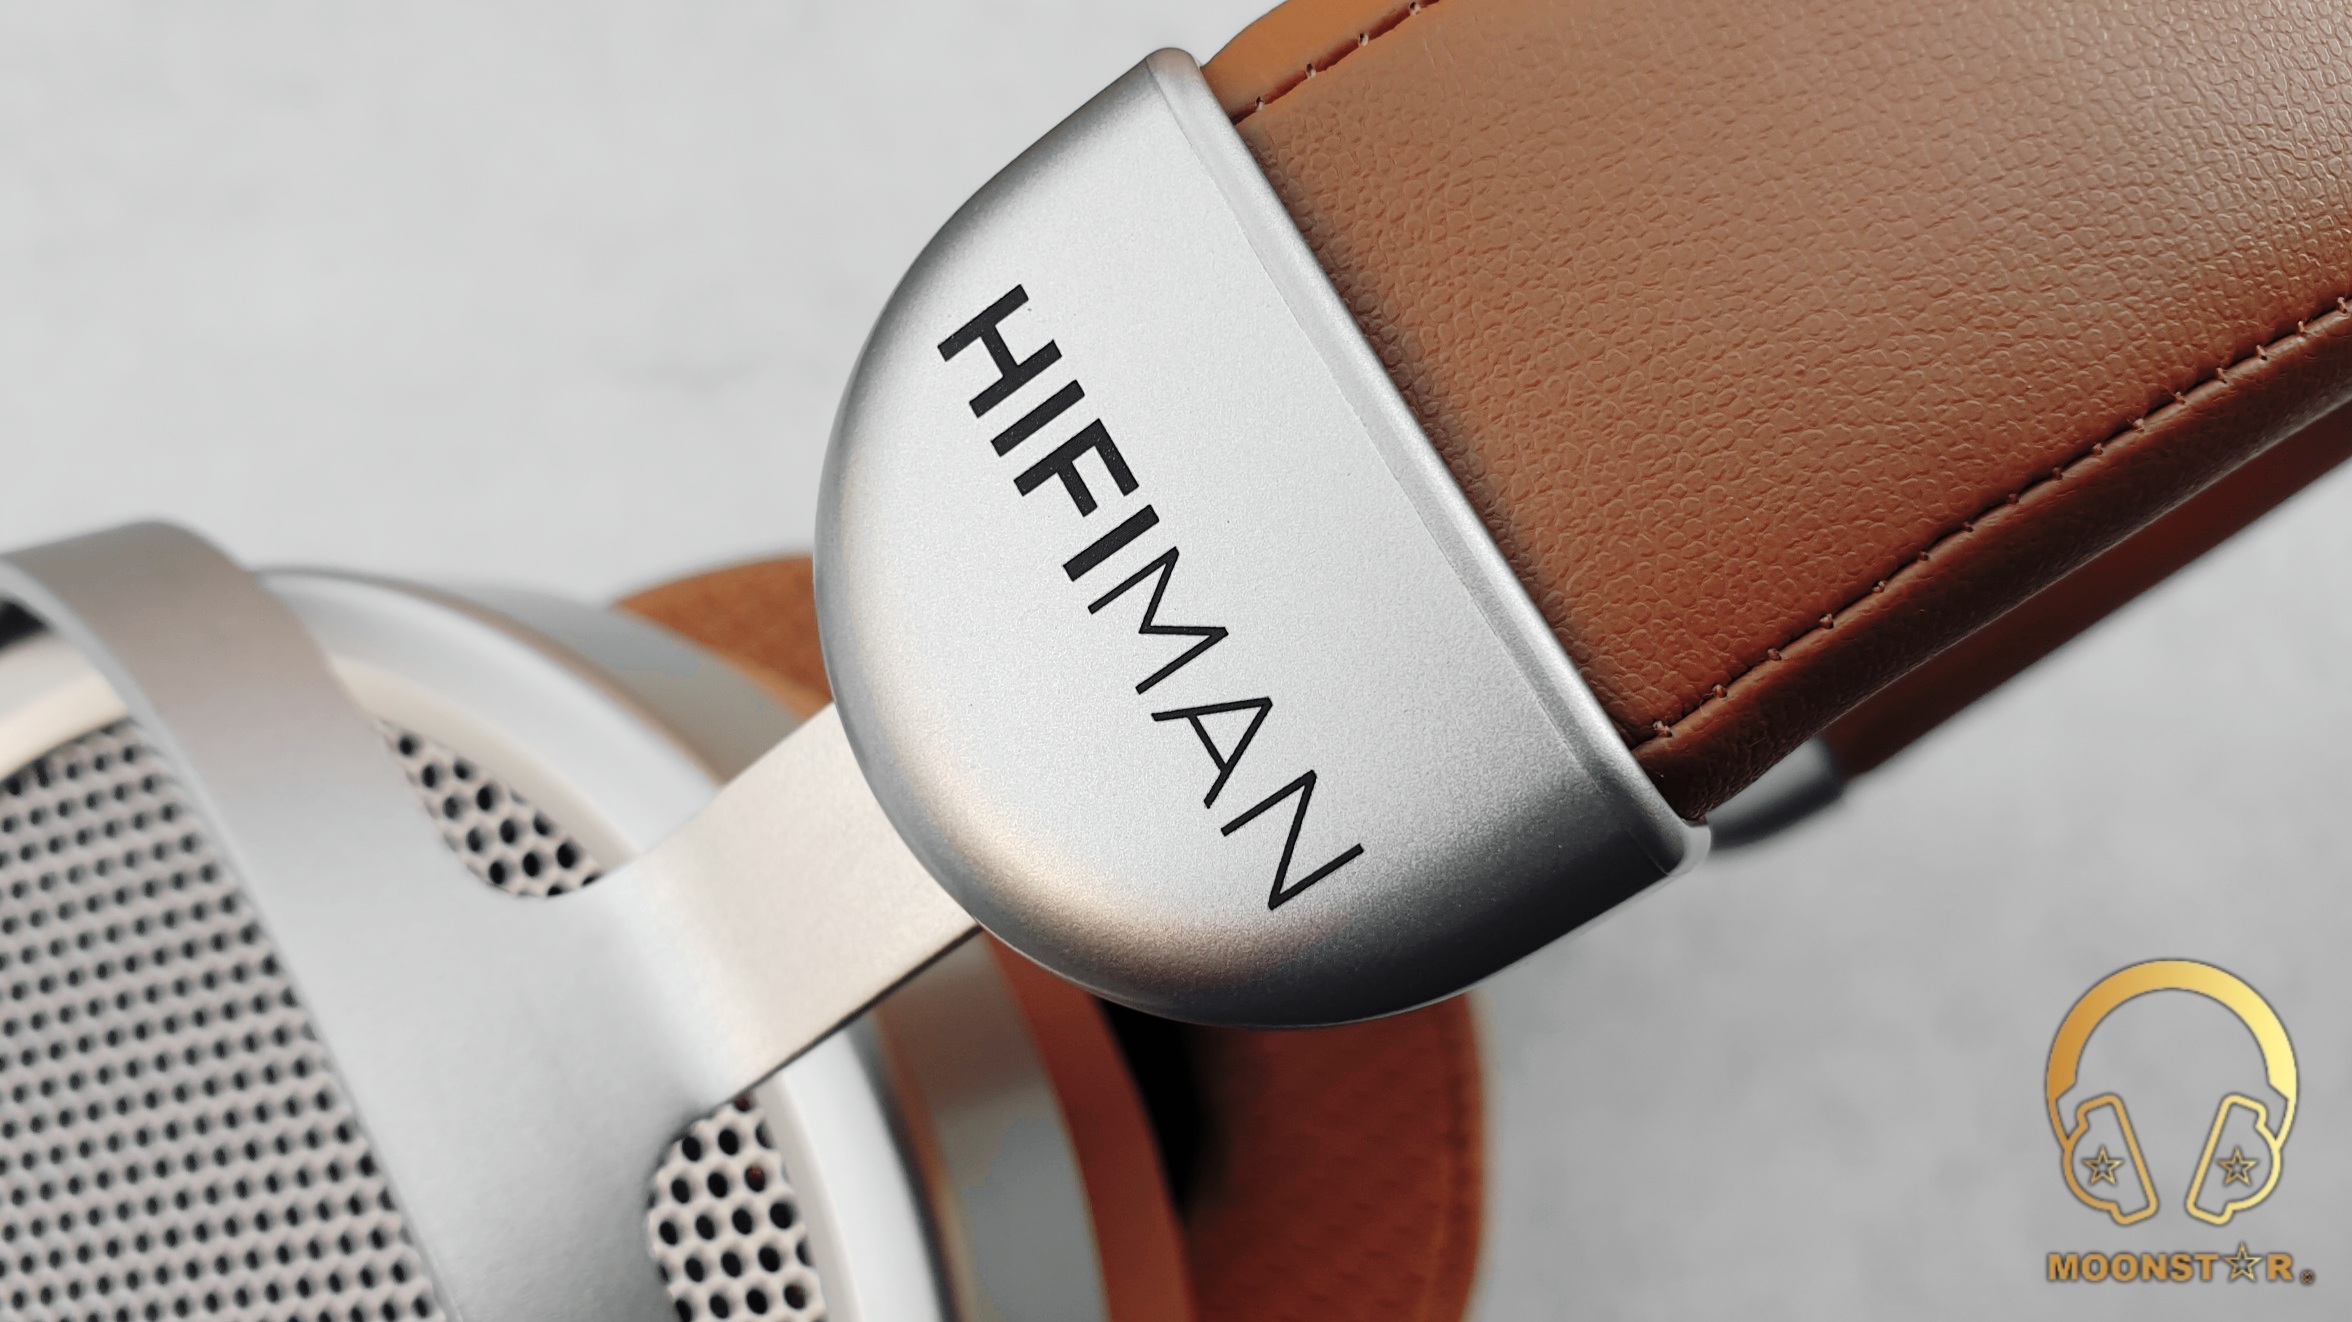 HiFiMAN DEVA Headphone Review » MOONSTAR Reviews